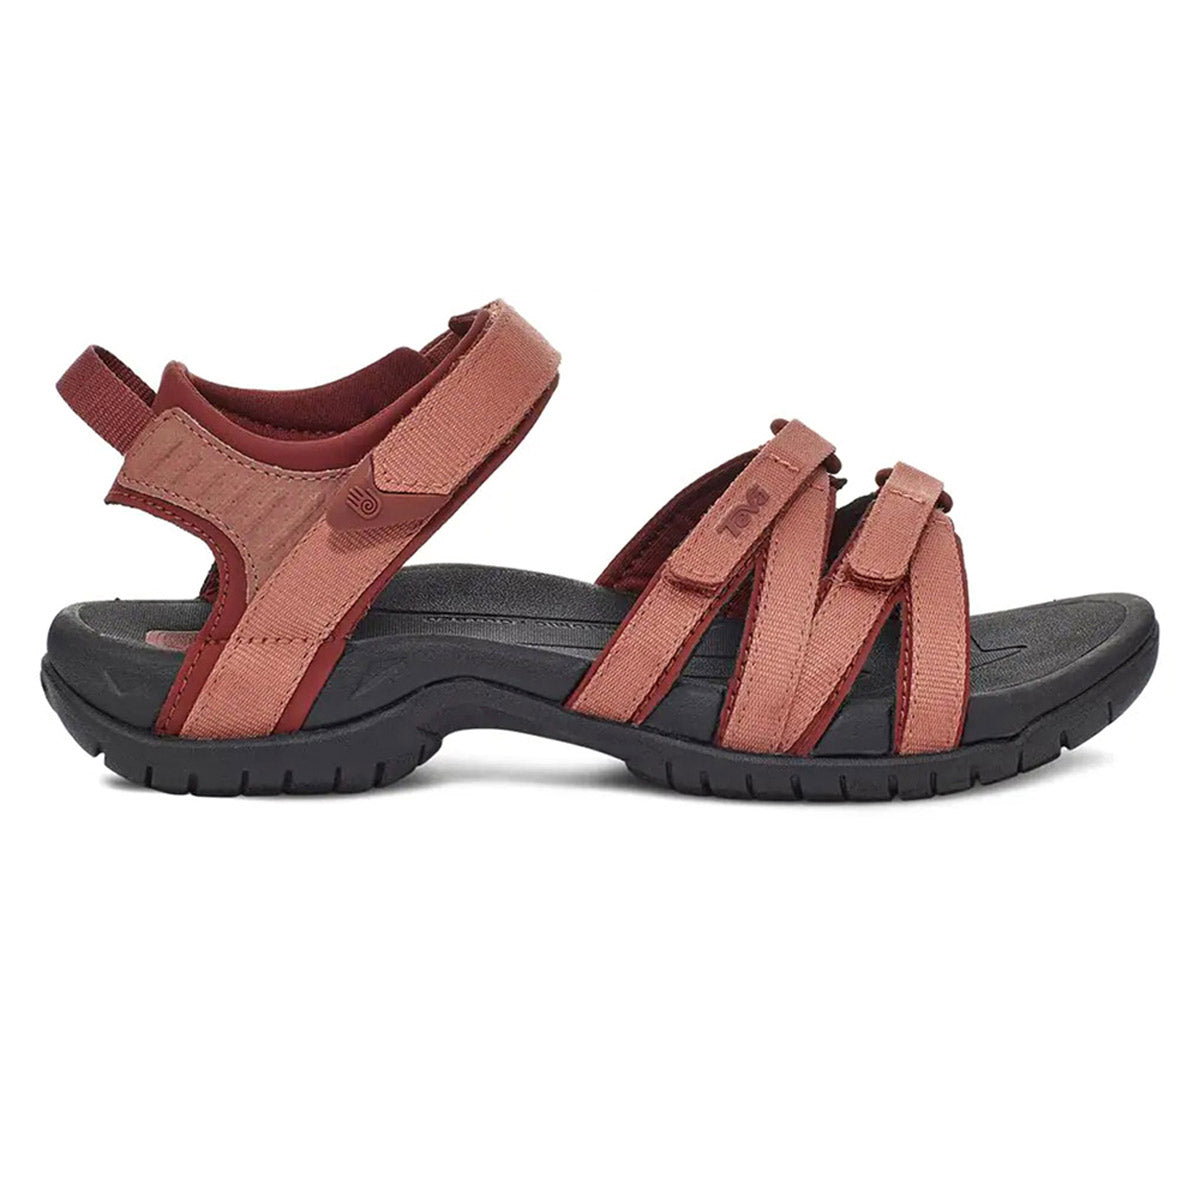 A pair of brown Teva Tirra Aragon vegan sandals on a white background.